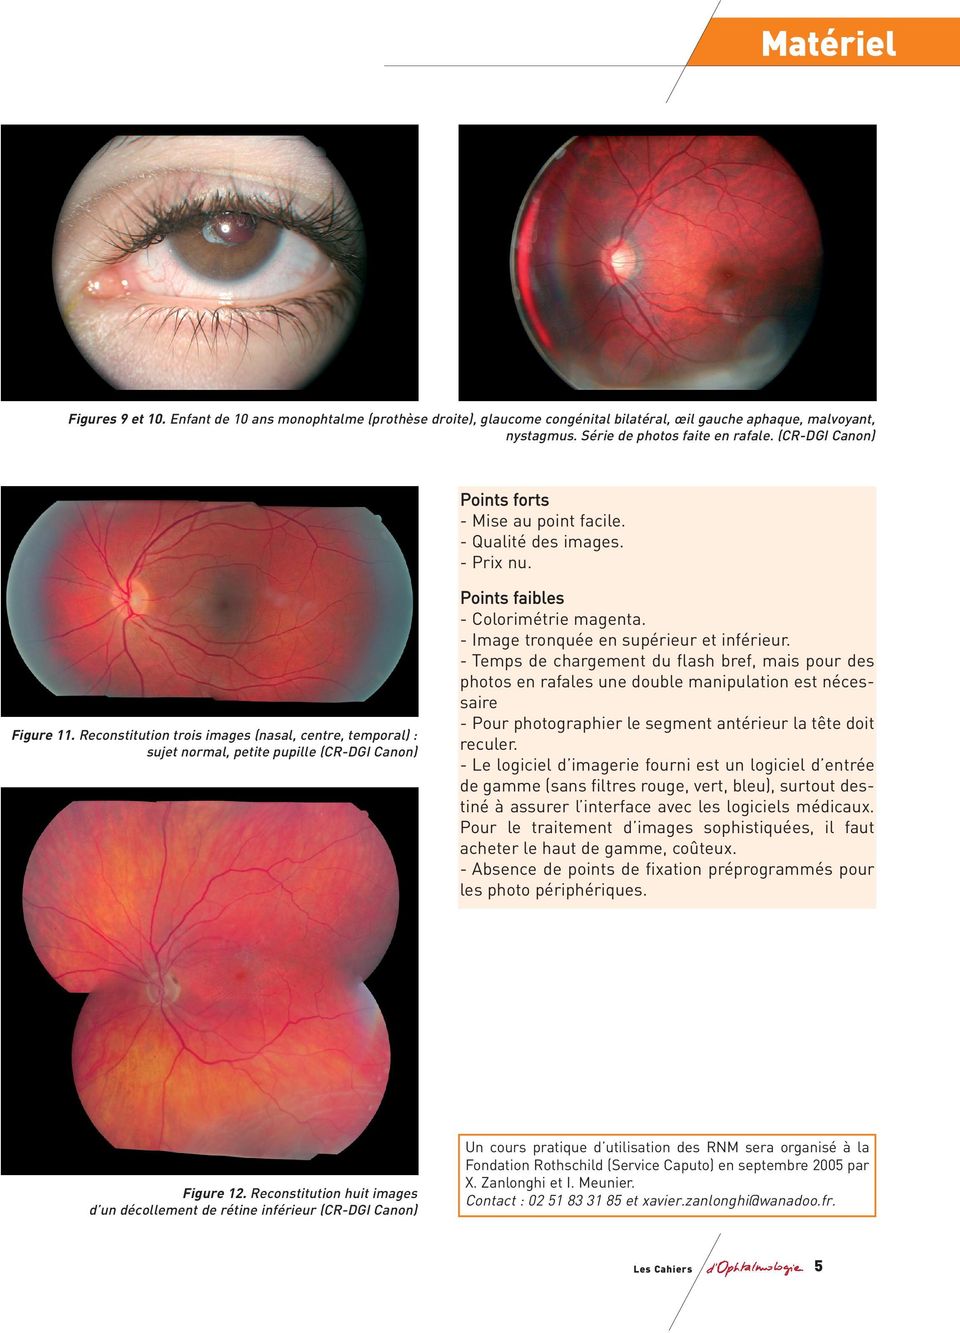 Reconstitution trois images (nasal, centre, temporal) : sujet normal, petite pupille (CR-DGI Canon) Figure 12.